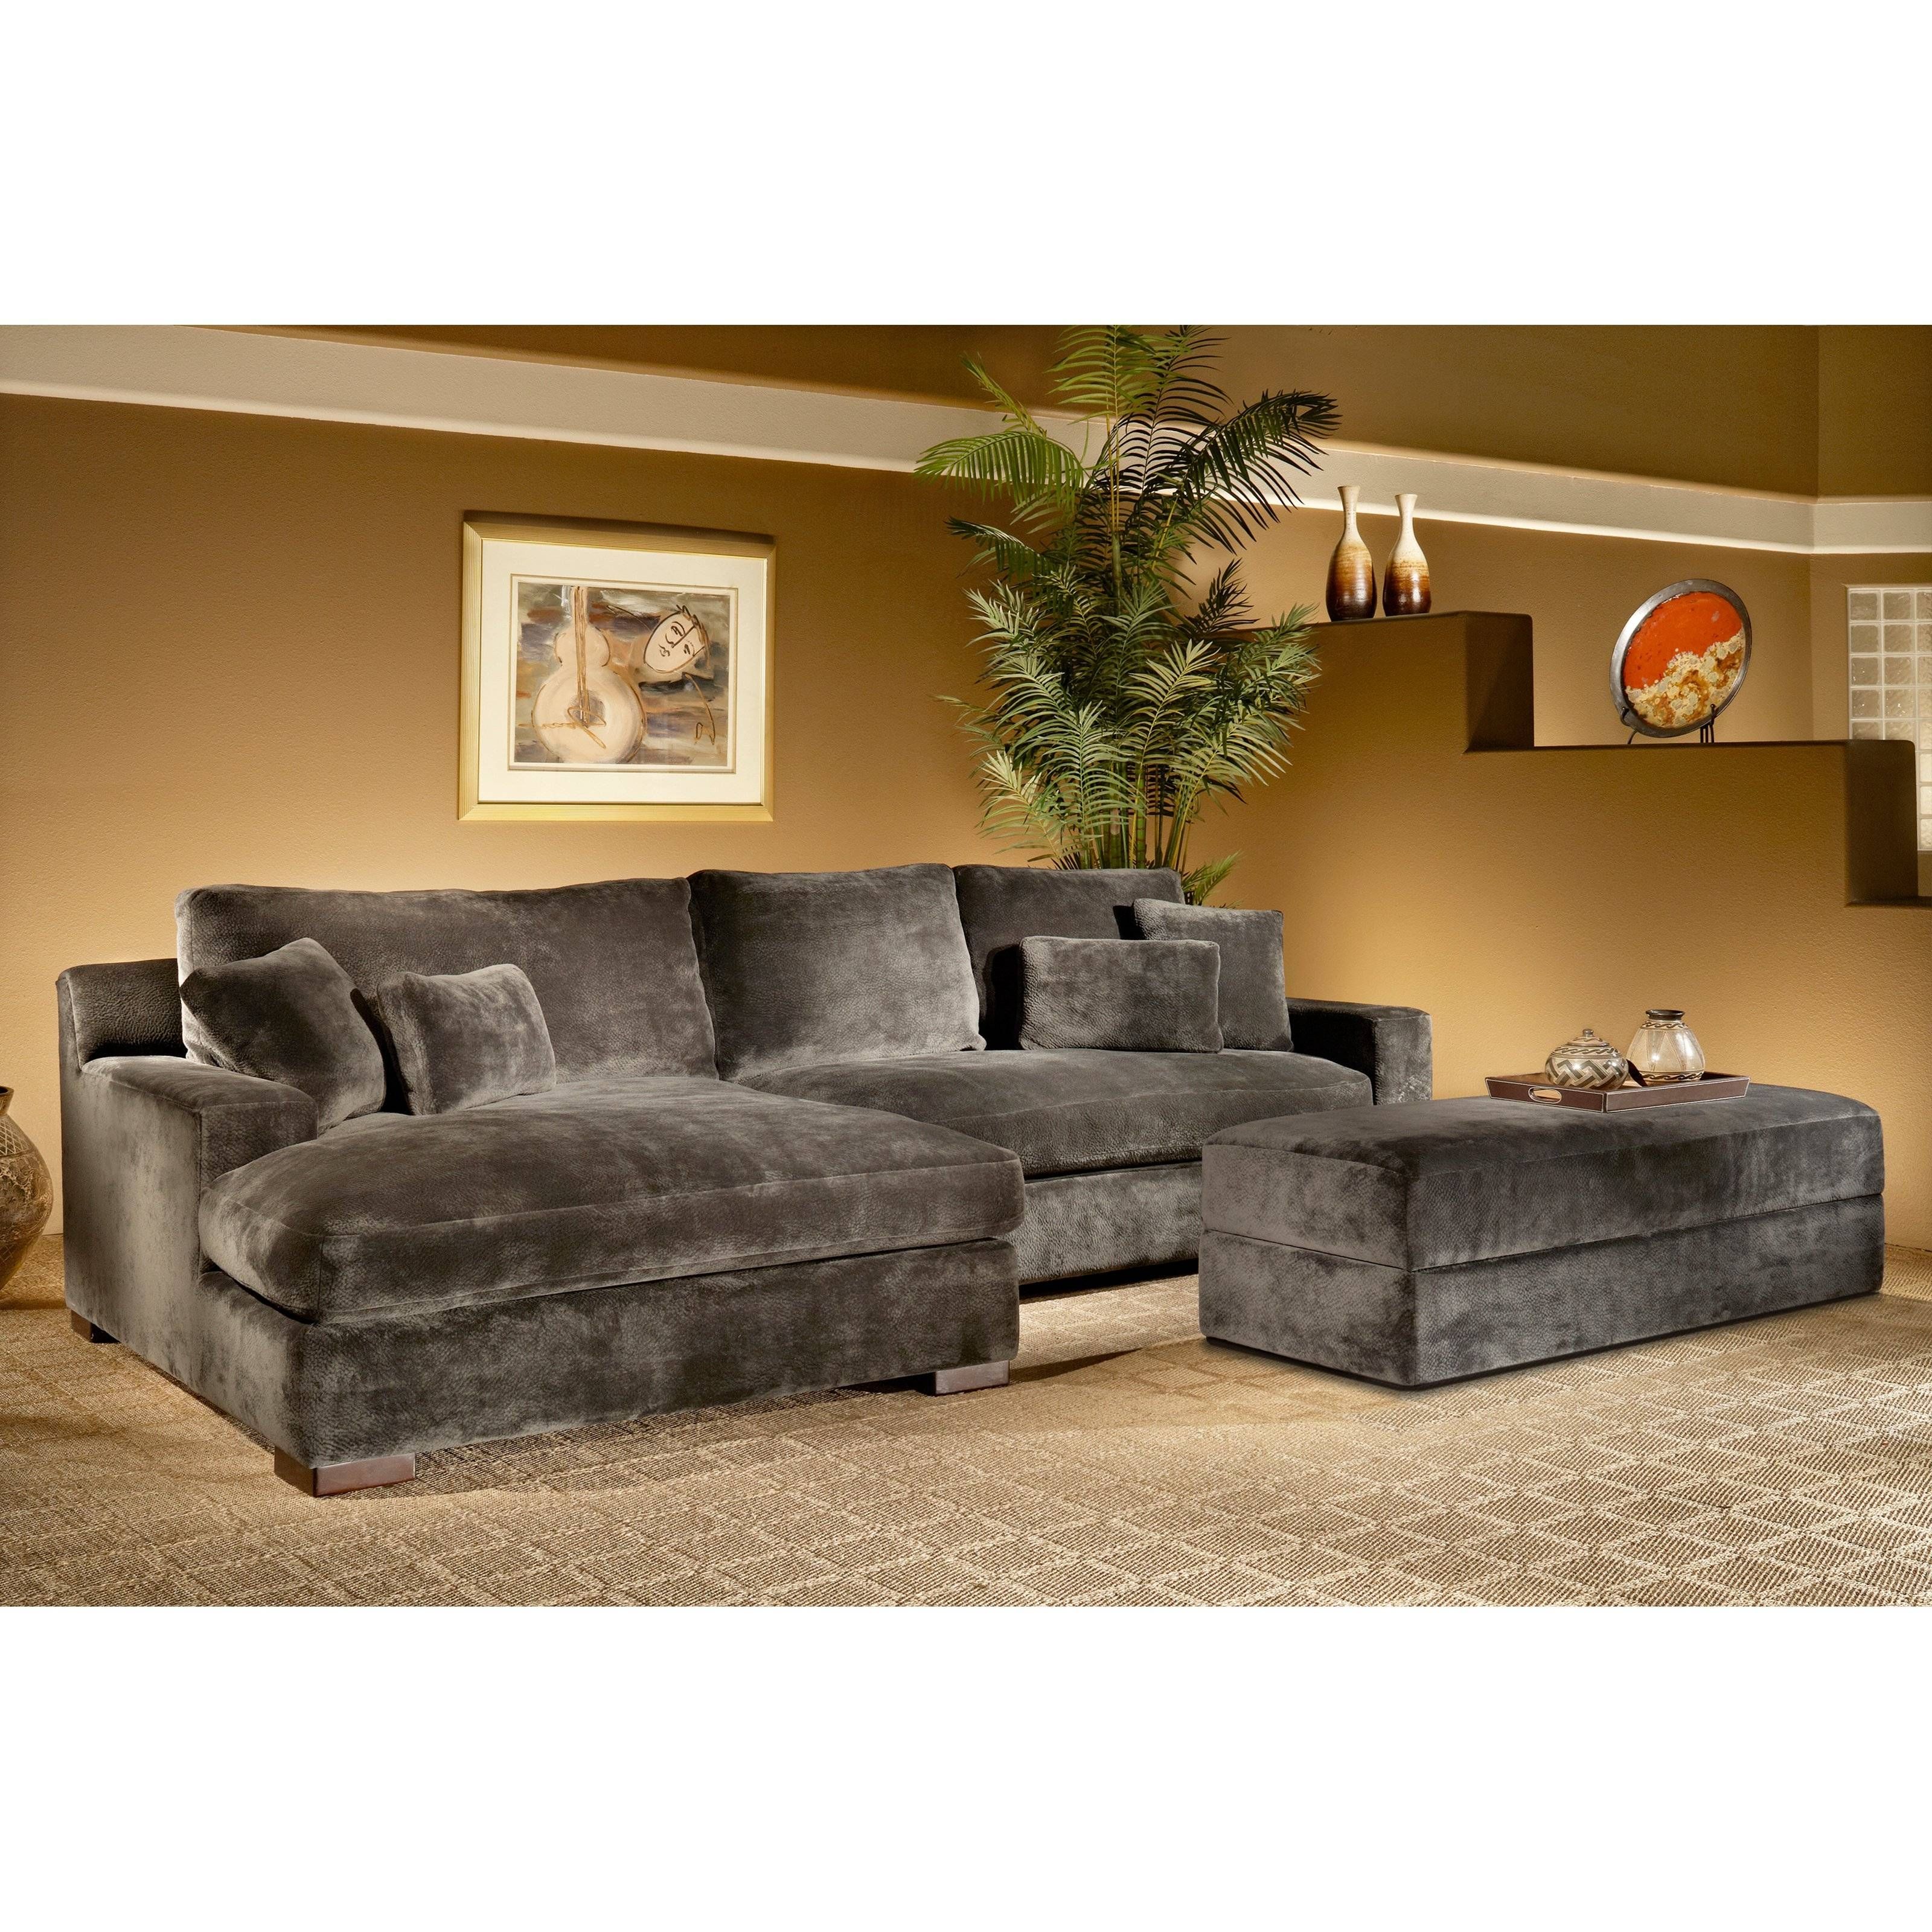 Fairmont Designs Doris 2 Piece Sectional Sofa With Storage Ottoman With Sectional Sofa With Storage (View 11 of 25)